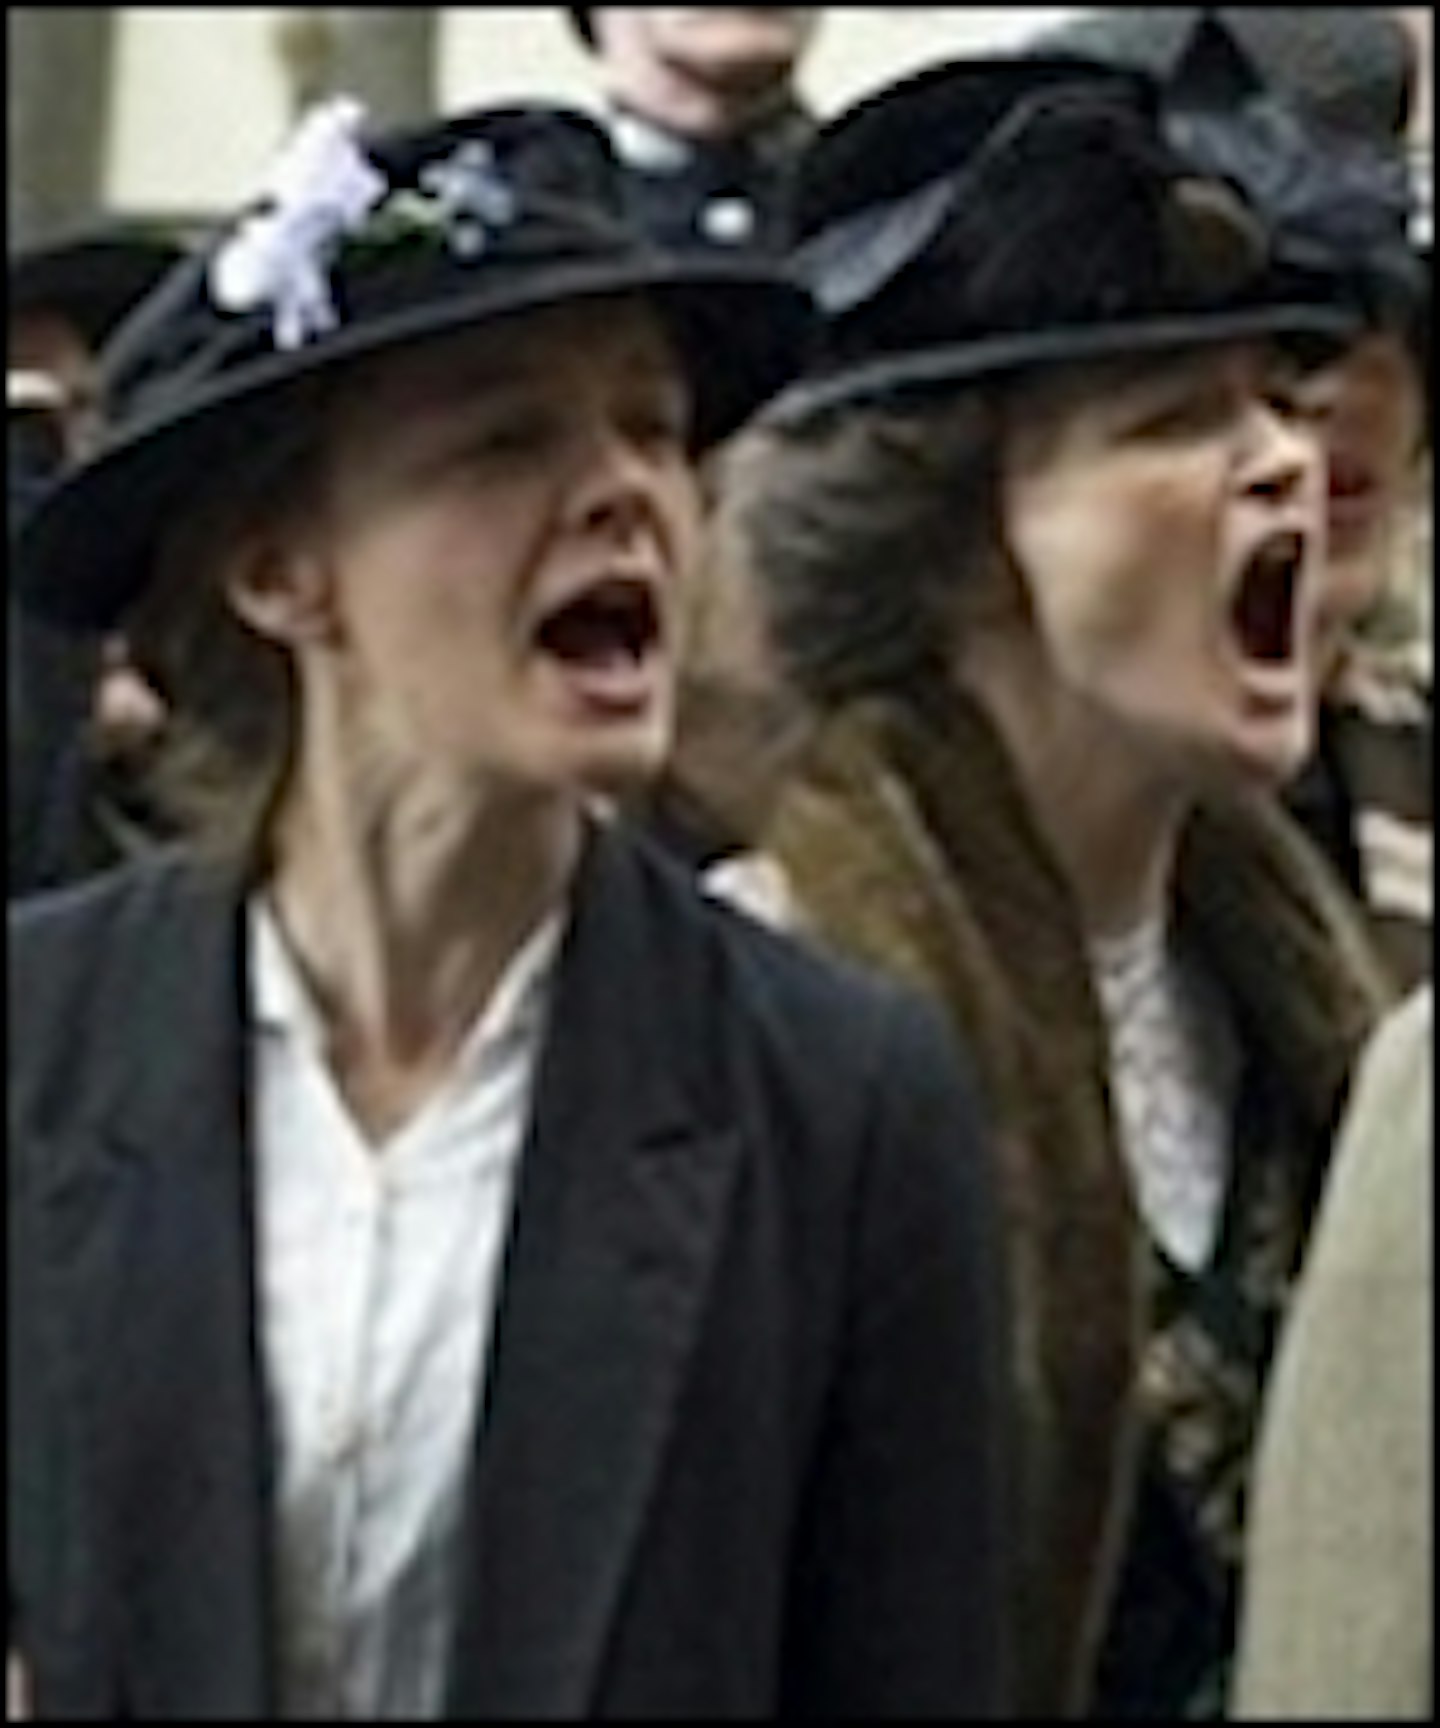 Suffragette Teaser Trailer Marches Online